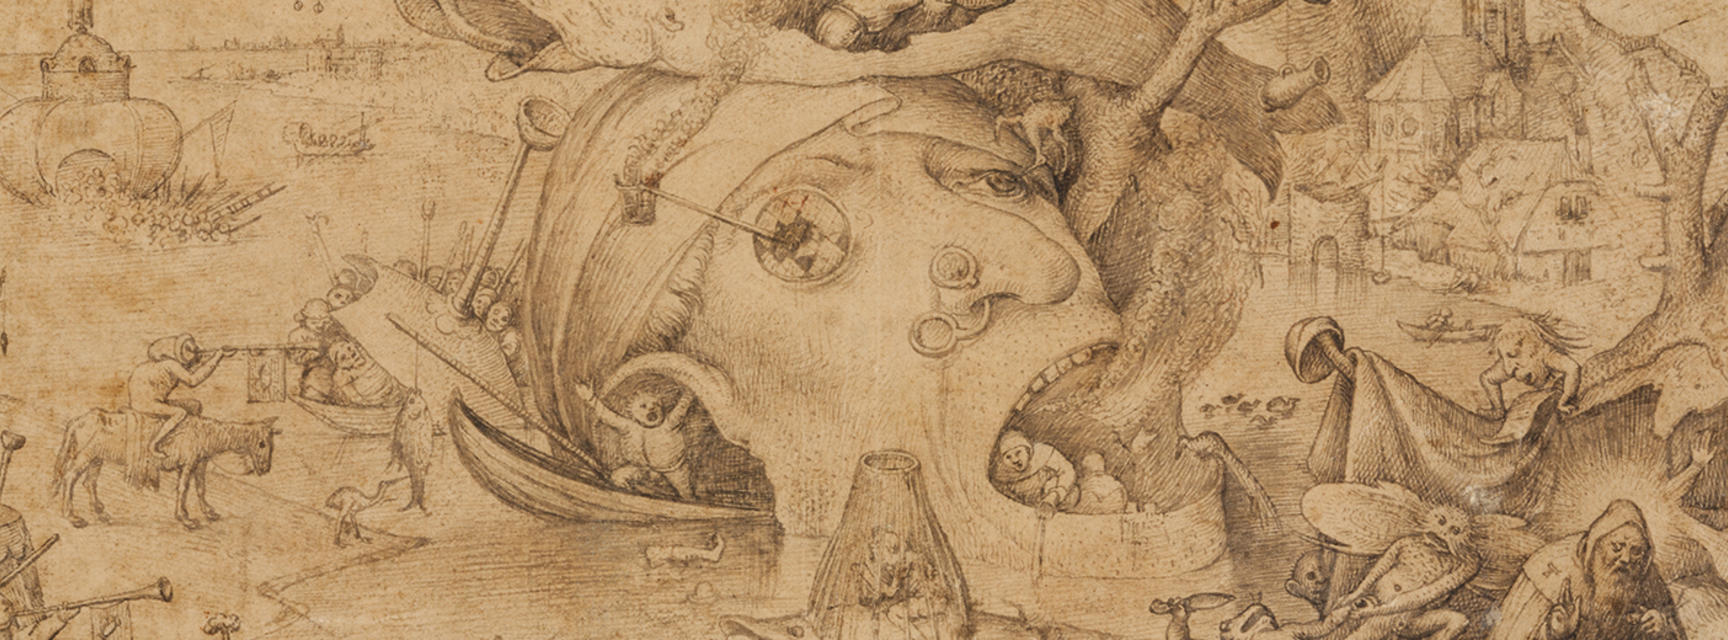 Pieter Bruegel's allegorical Temptation of Saint Anthony drawing detail